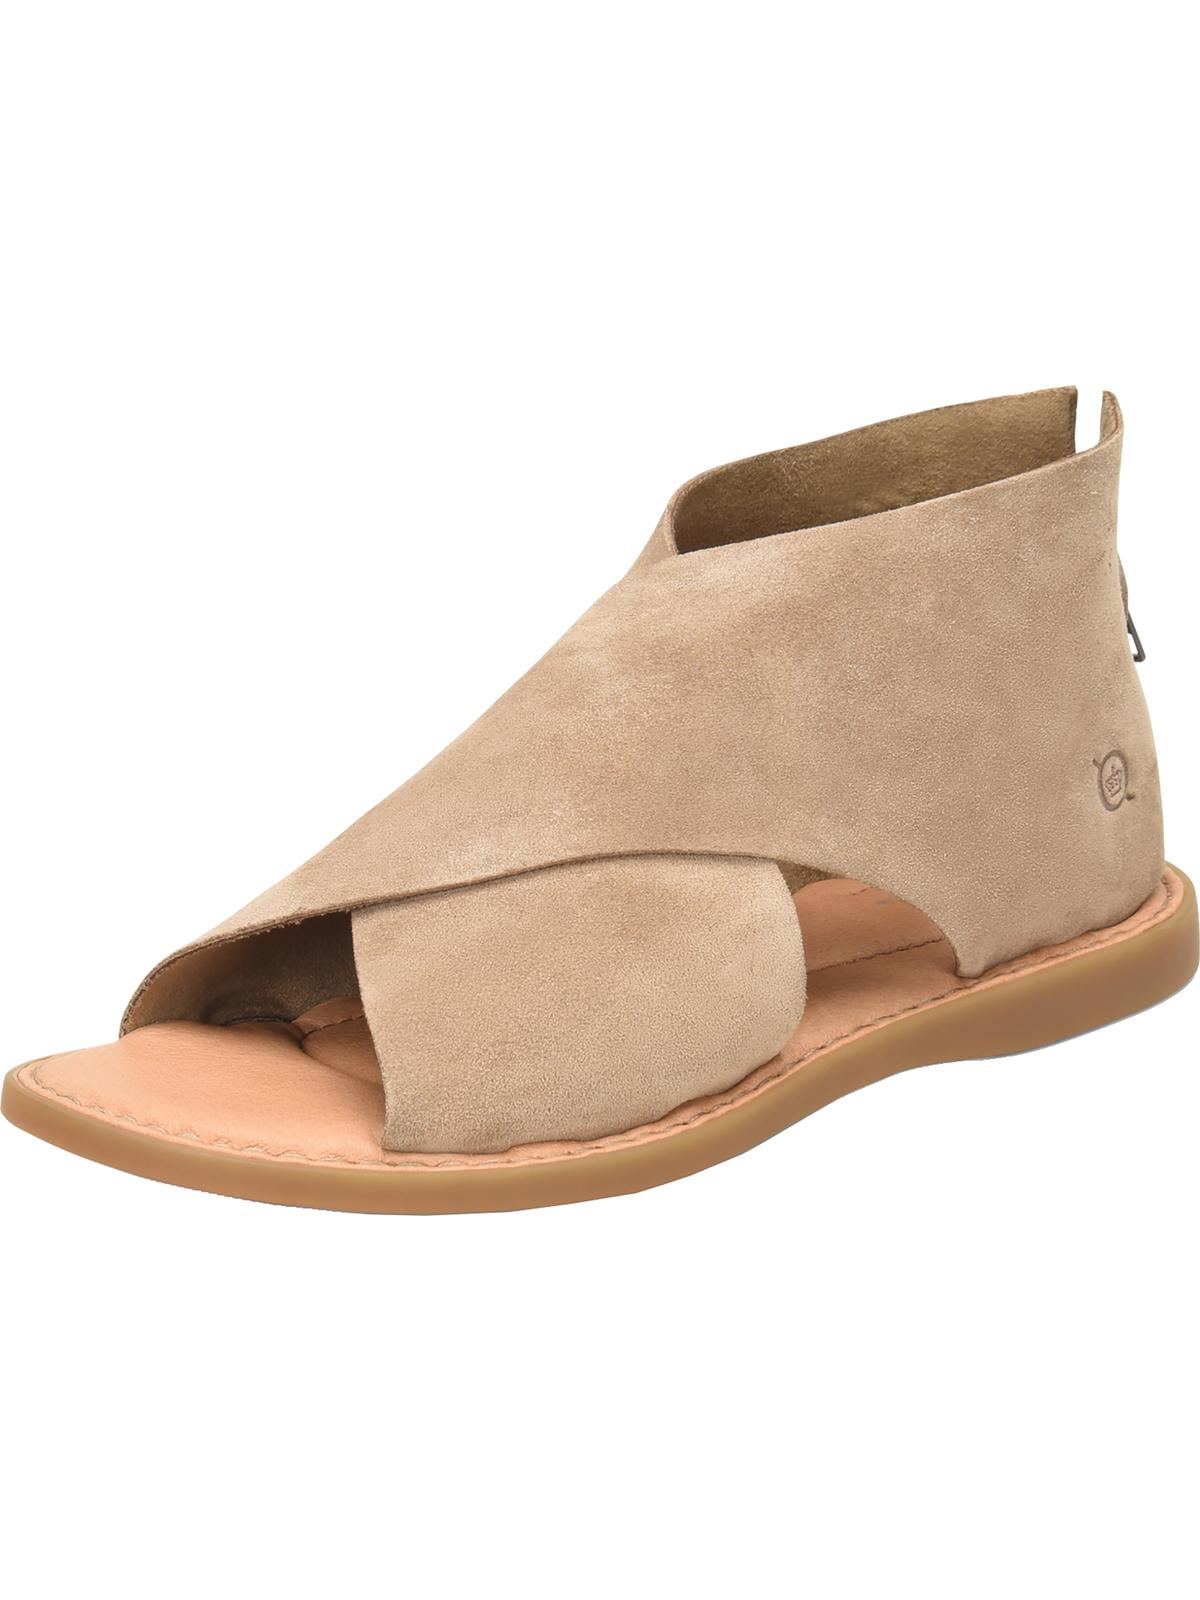 Born Womens Iwa Suede Peep Toe Flat Sandals Taupe 7 Medium (B,M) -  Walmart.com